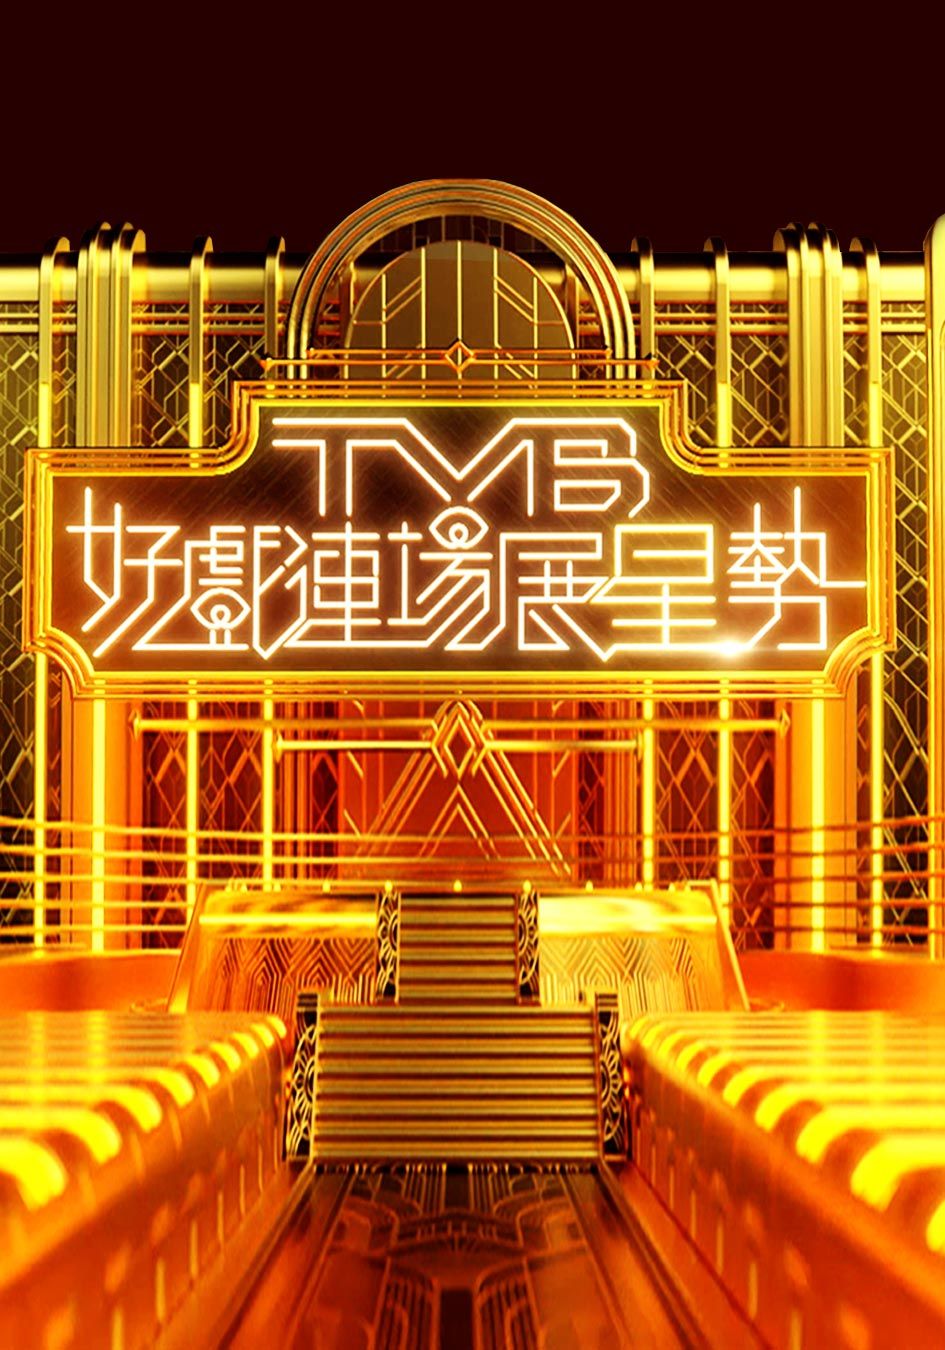 TVB好戲連場展星勢-TVB 2020 Allstar Filmart